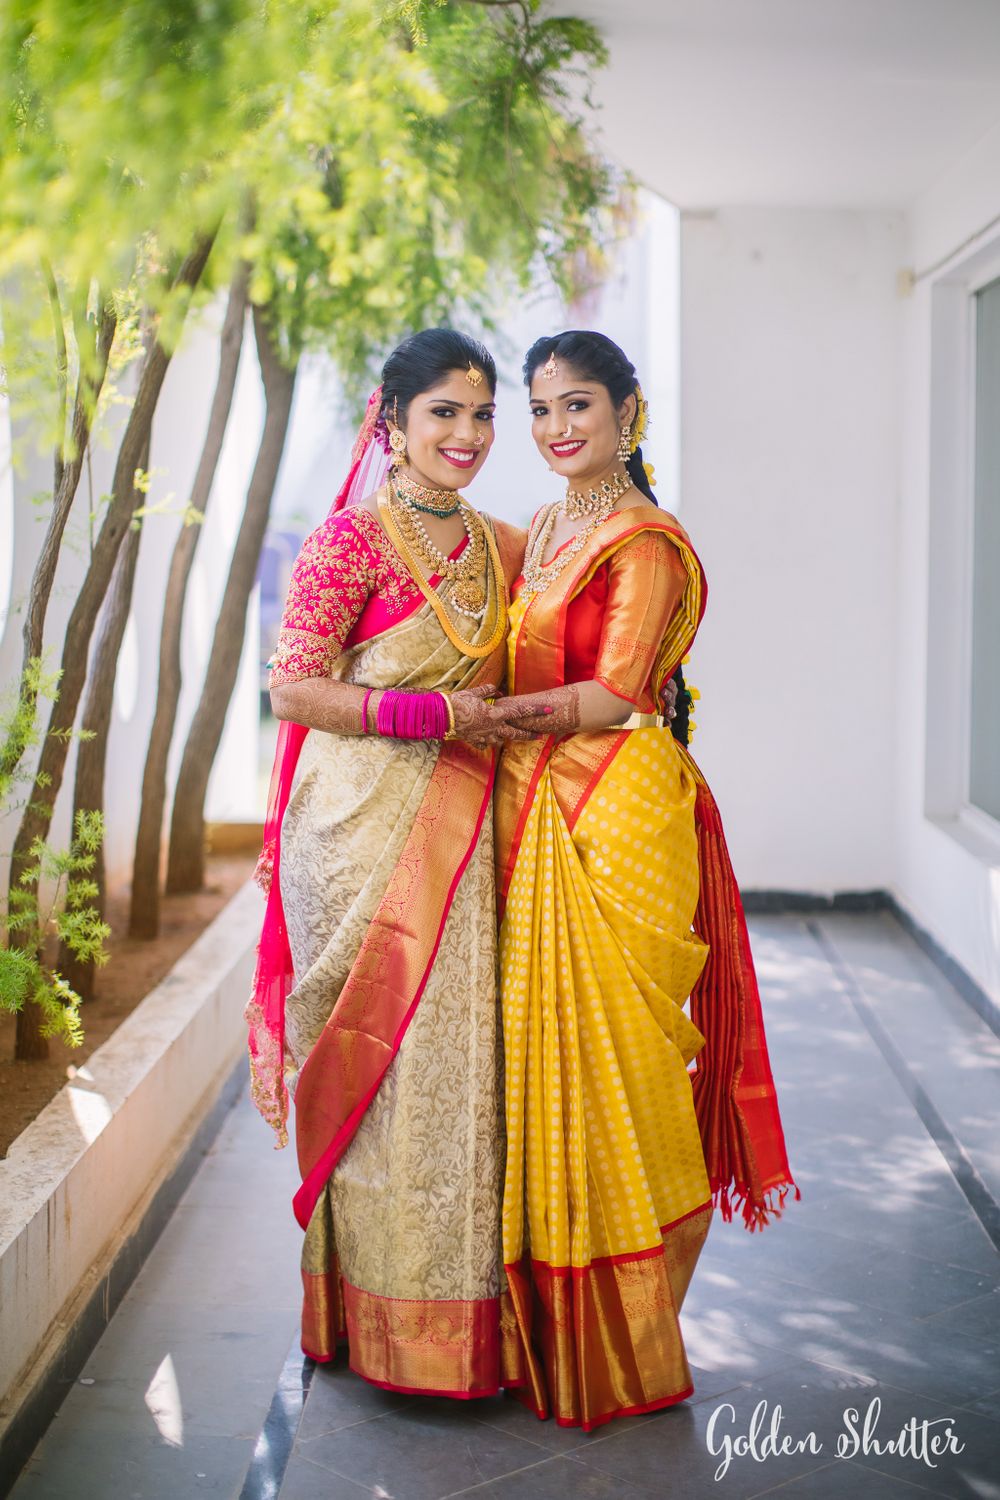 Photo of Bride and bridesmaid in pretty sarees